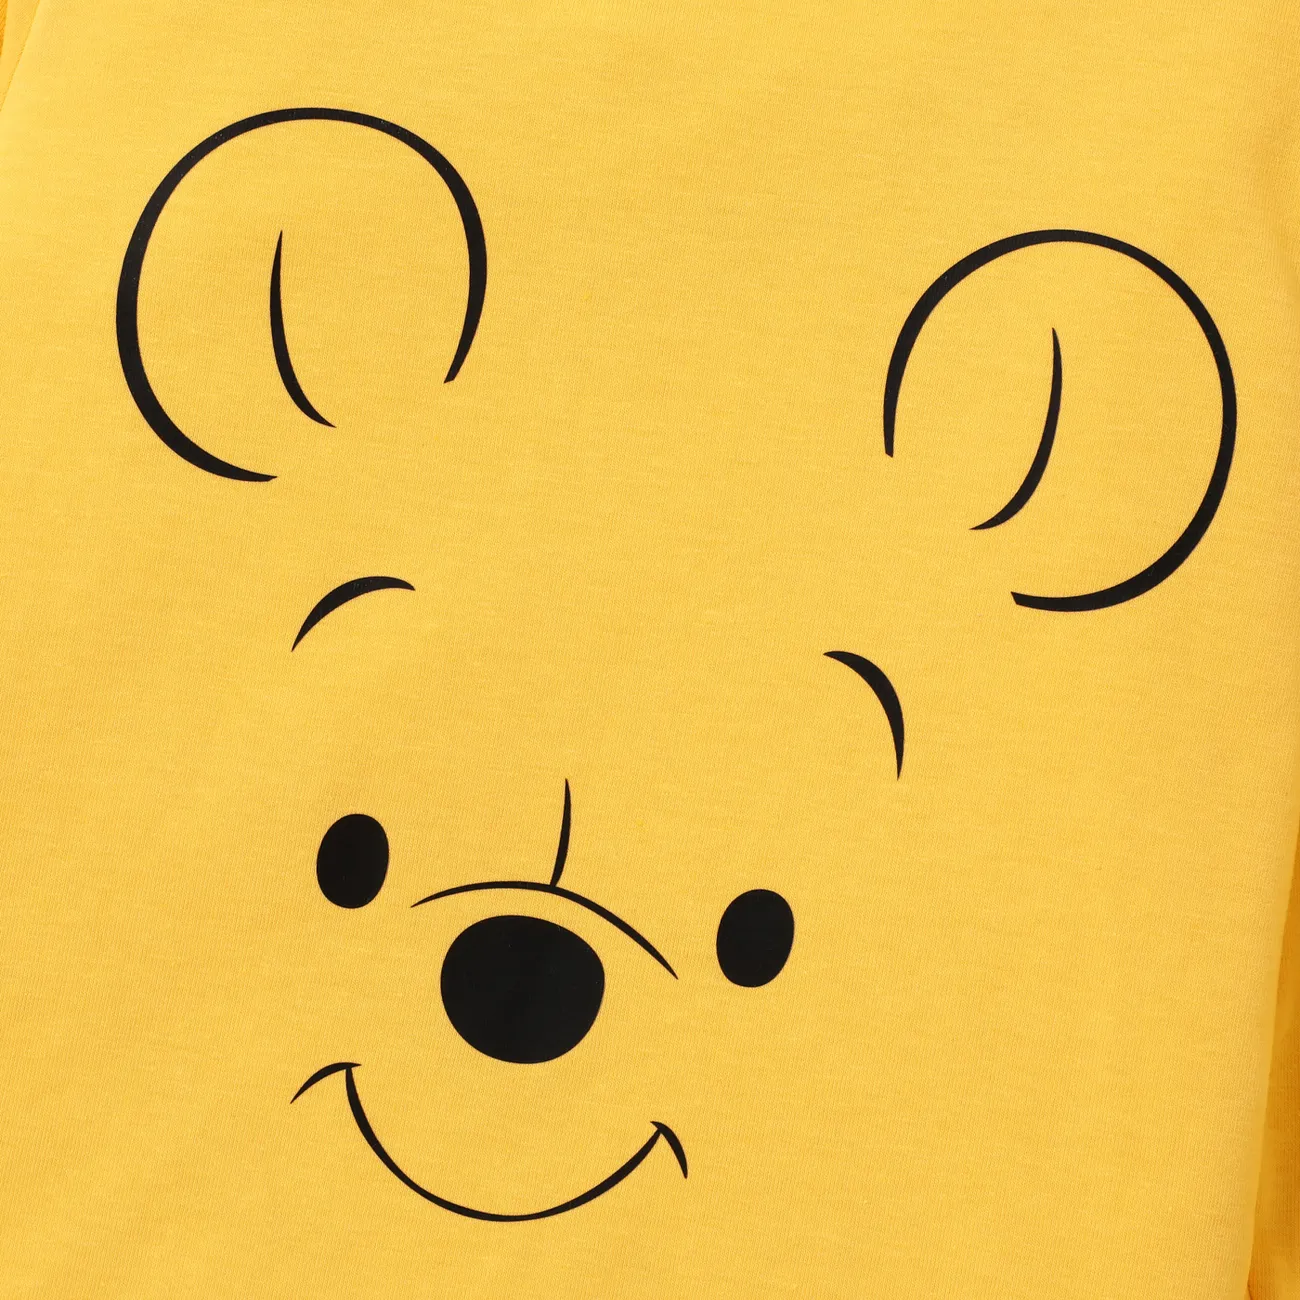 Disney Winnie the Pooh Niño pequeño Unisex Infantil Manga larga Camiseta Amarillo big image 1